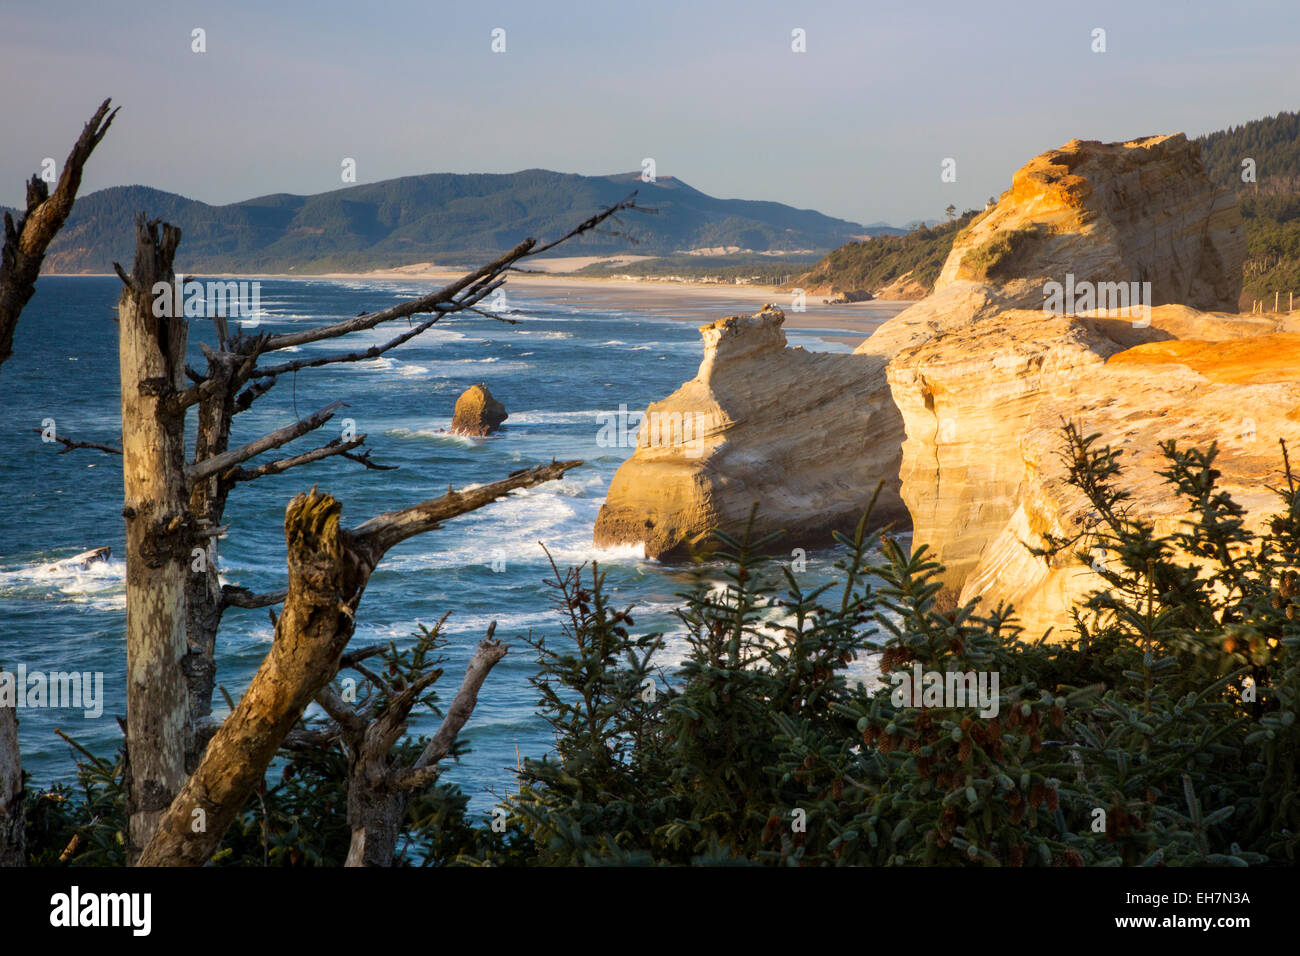 Felsformationen an der Küste am Cape Kiwanda, Oregon, USA Stockfoto